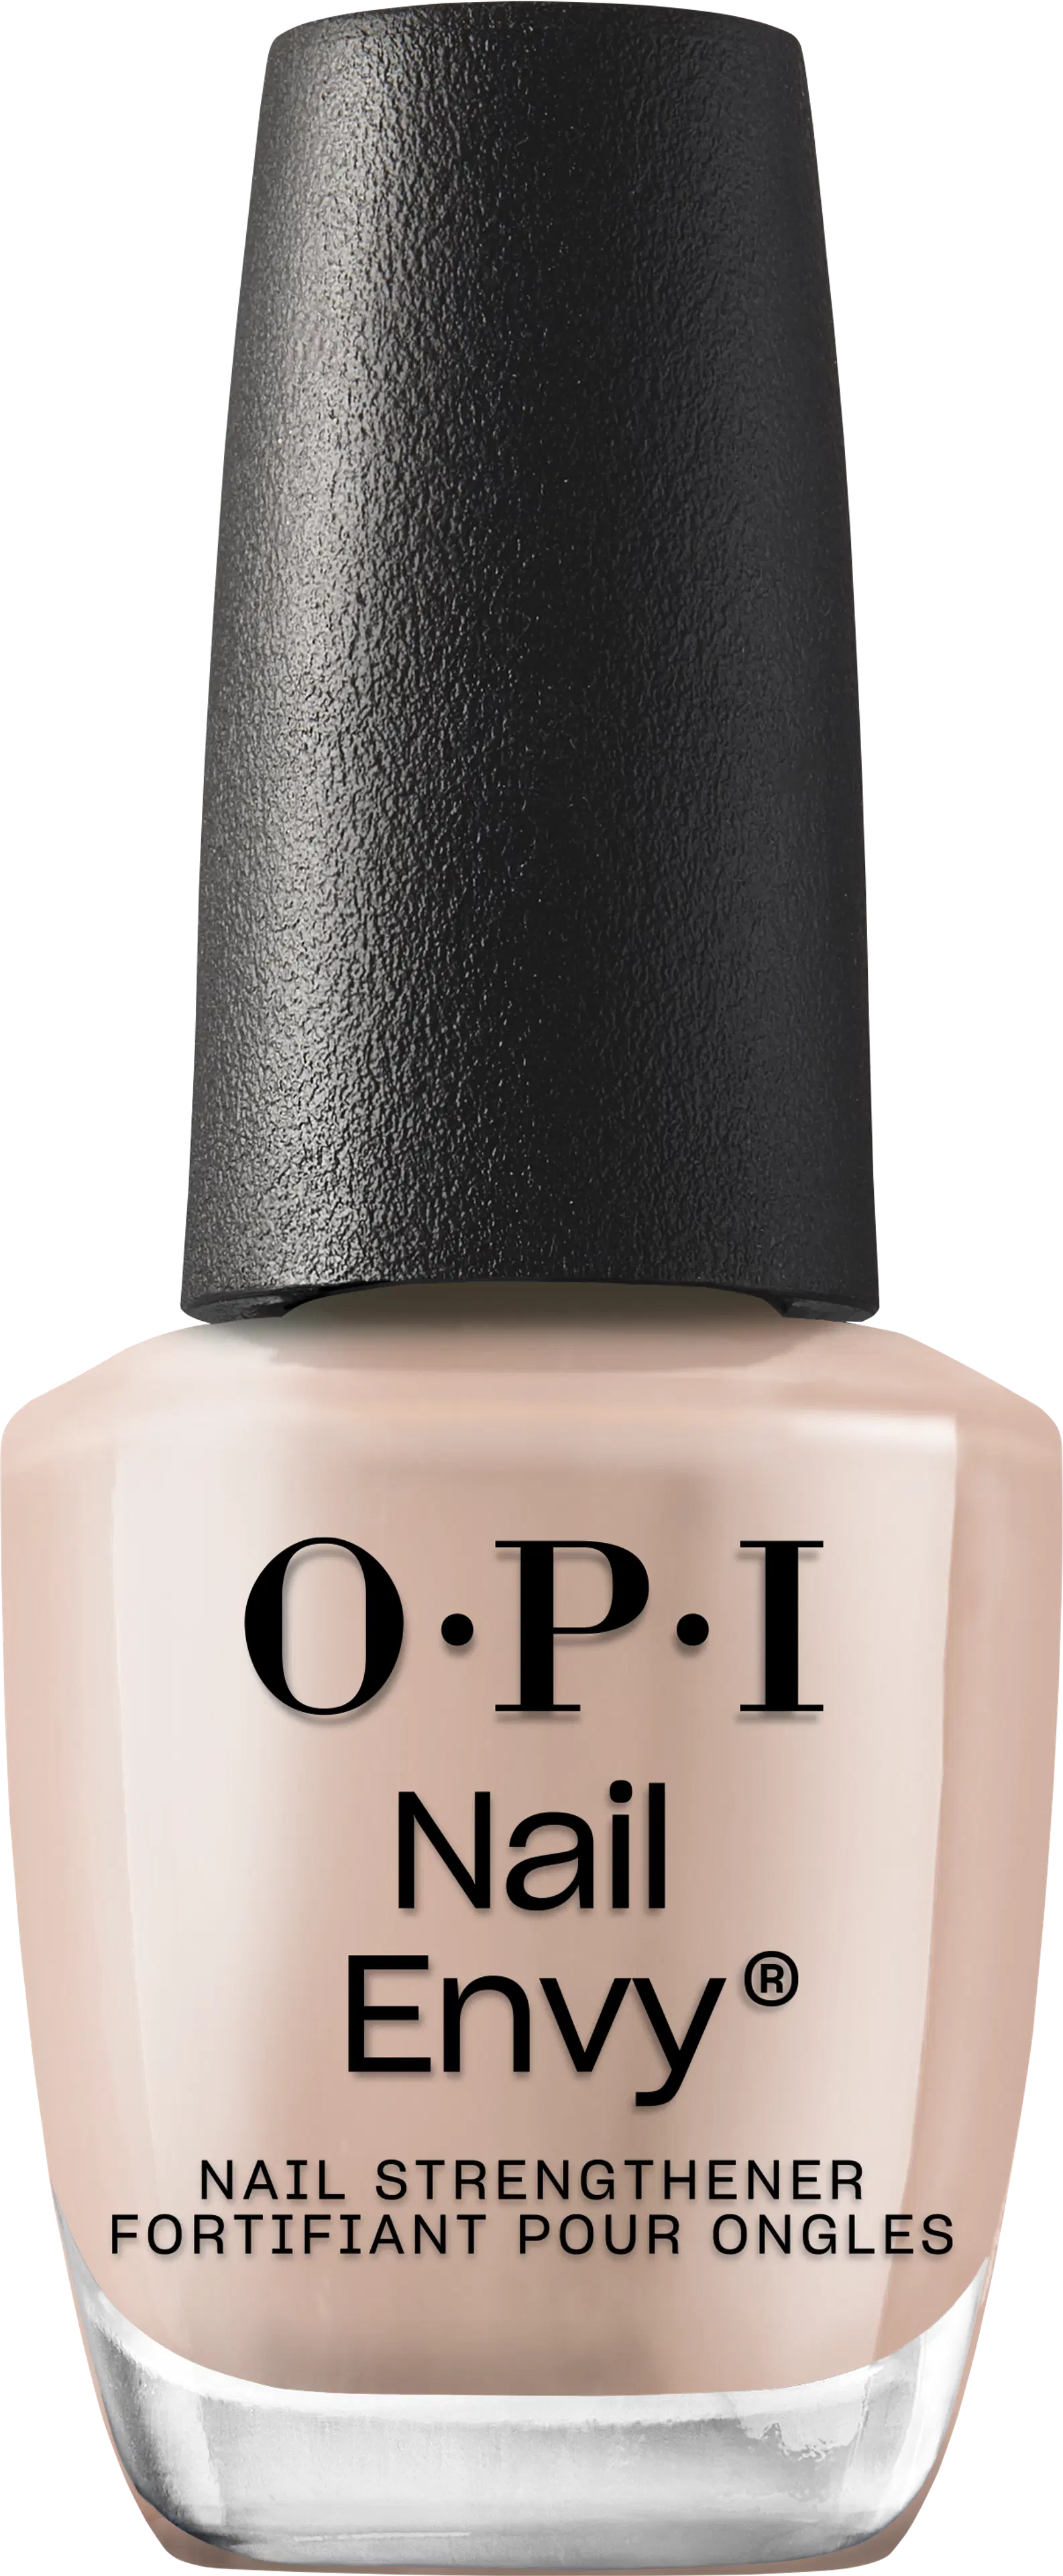 OPI Nail Envy Nail Strengthener Double Nude-y kynnenvahvistaja 15 ml